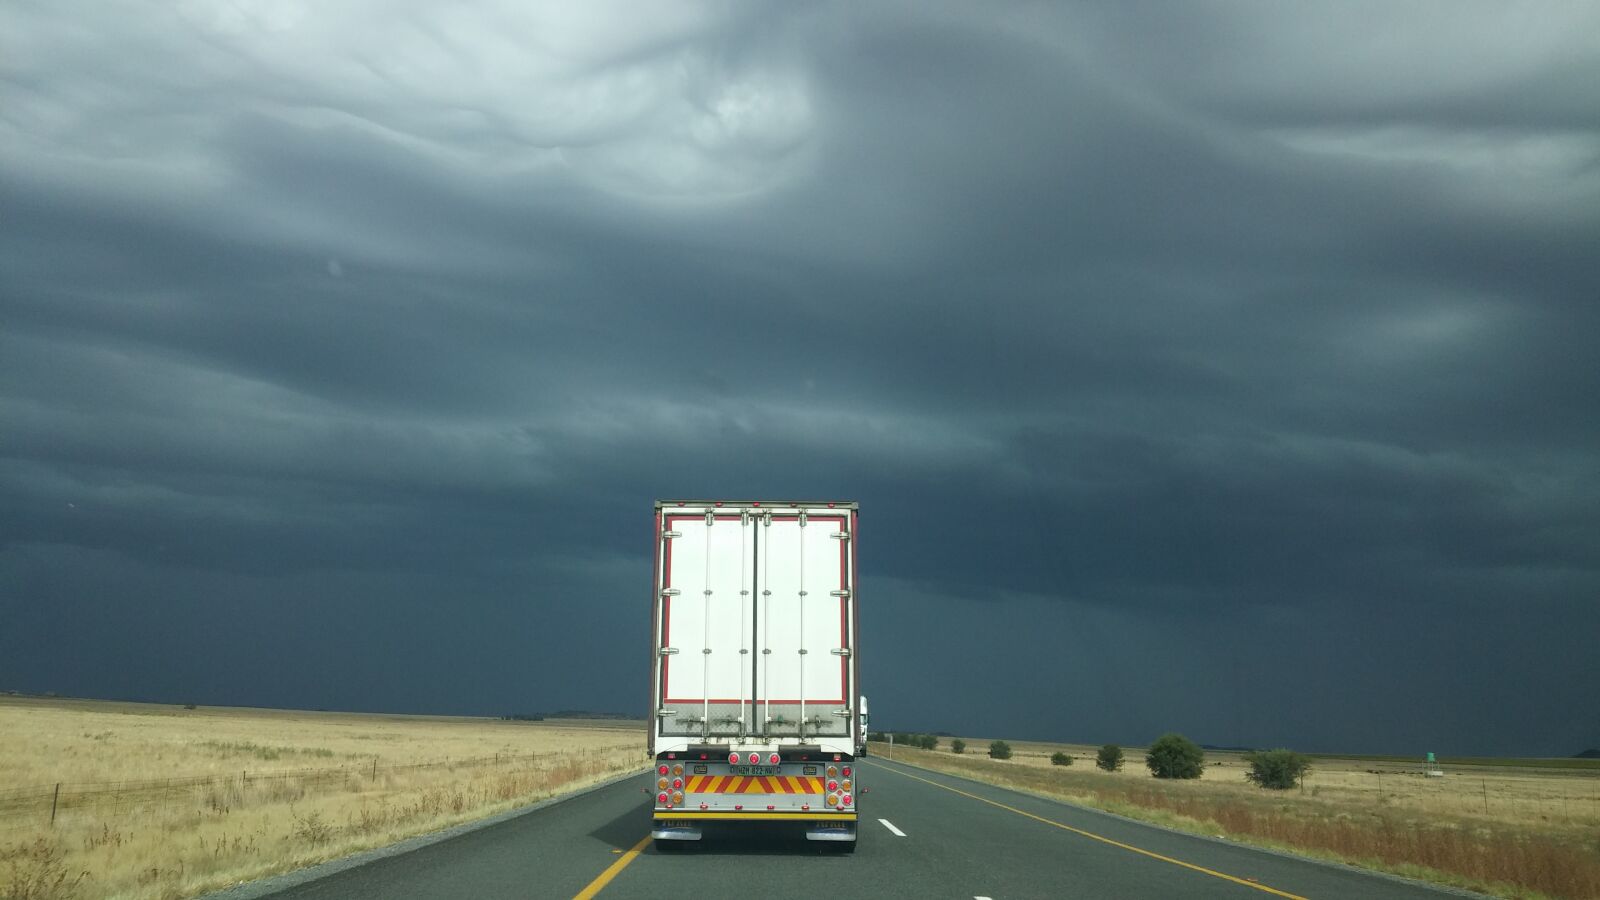 LG G3 sample photo. Road, thunderstorm, truck photography